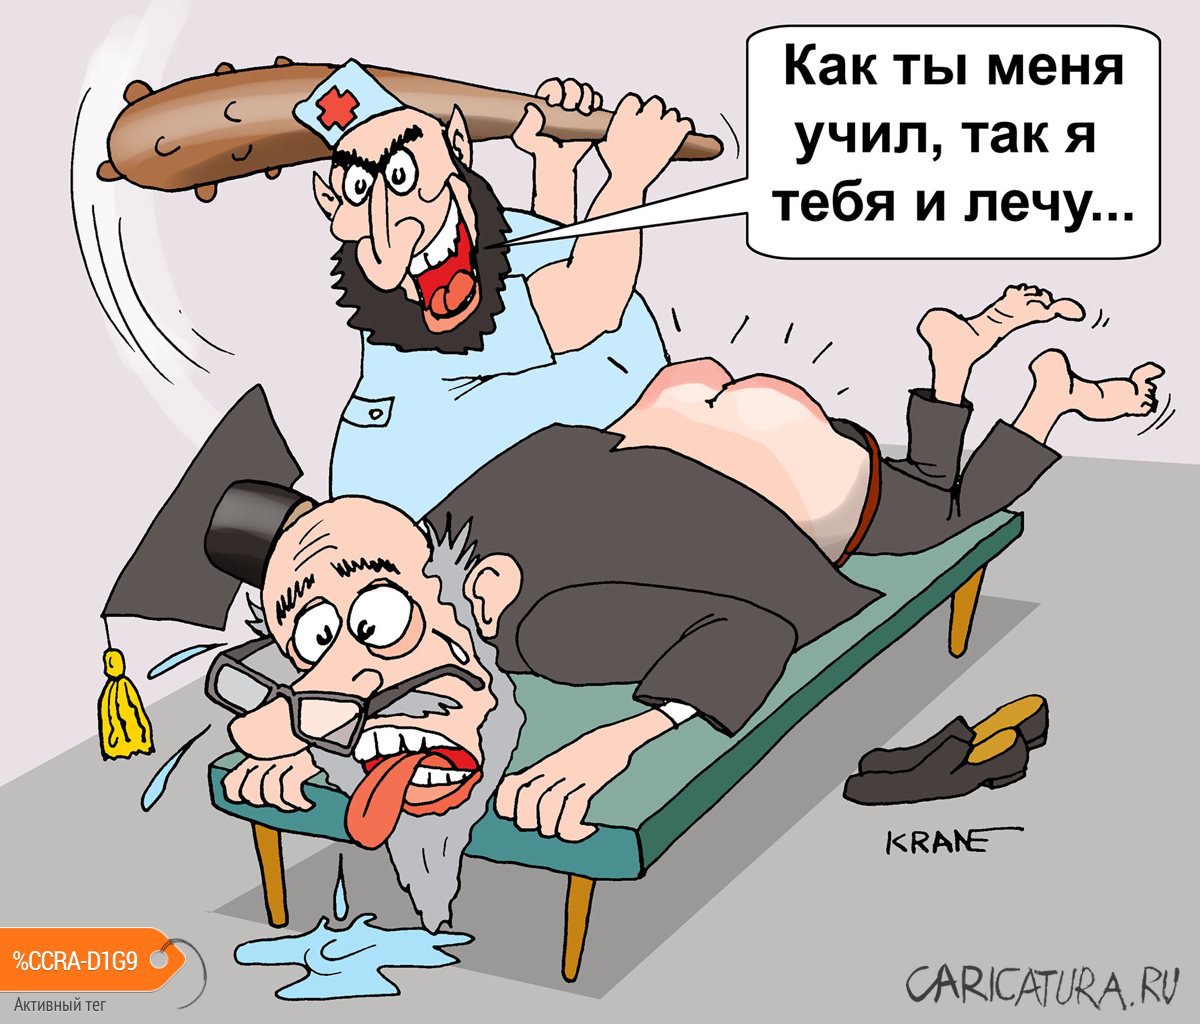 Карикатура "Пусть выпускники медакадемий лечат своих преподав", Евгений Кран